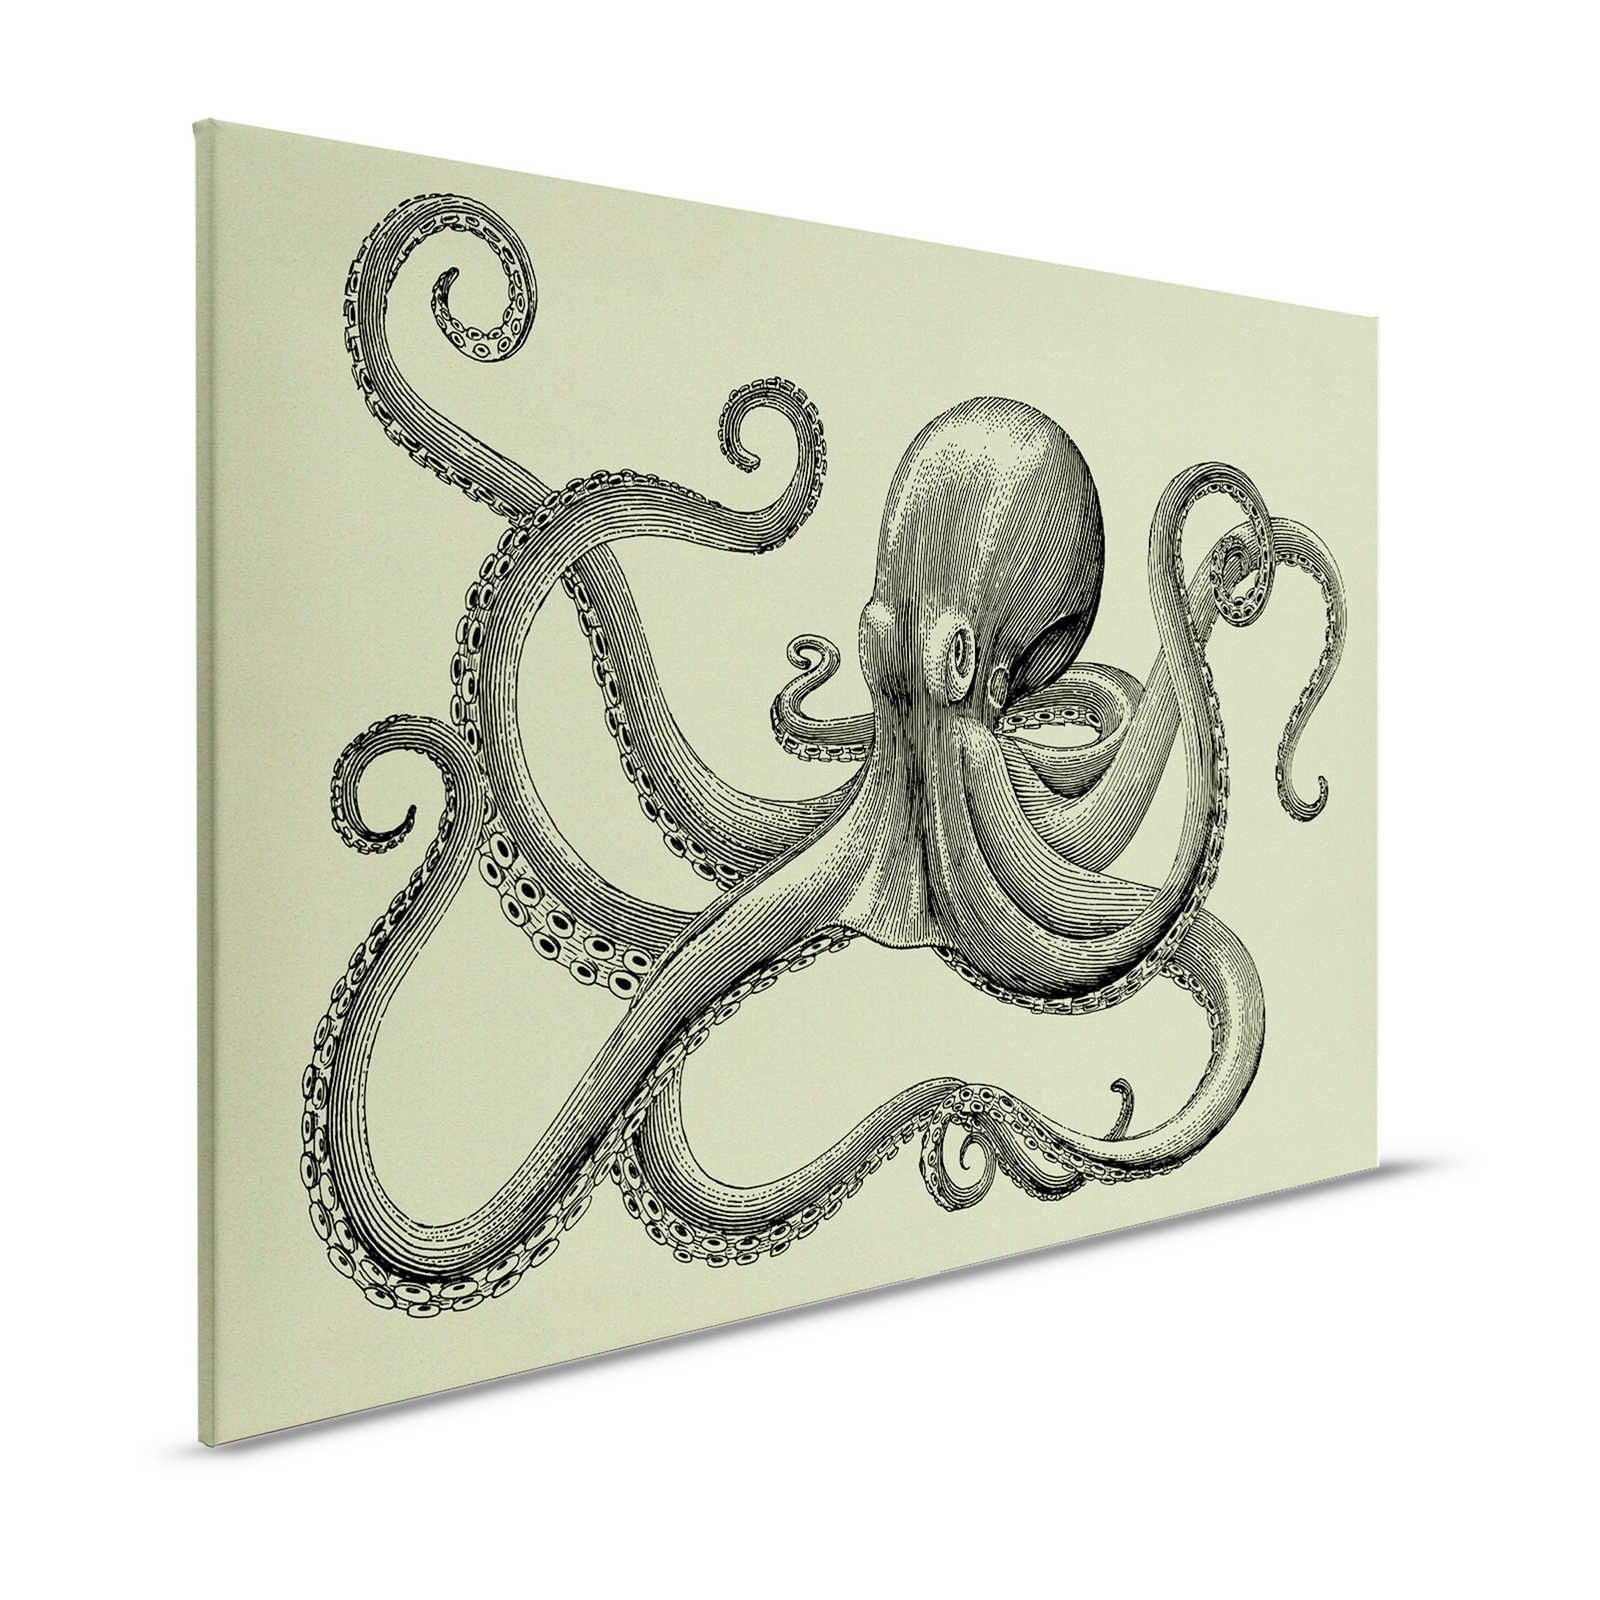 Jules 3 - Canvas painting Octopus in Sketch Style & Vintage Look - 1.20 m x 0.80 m
